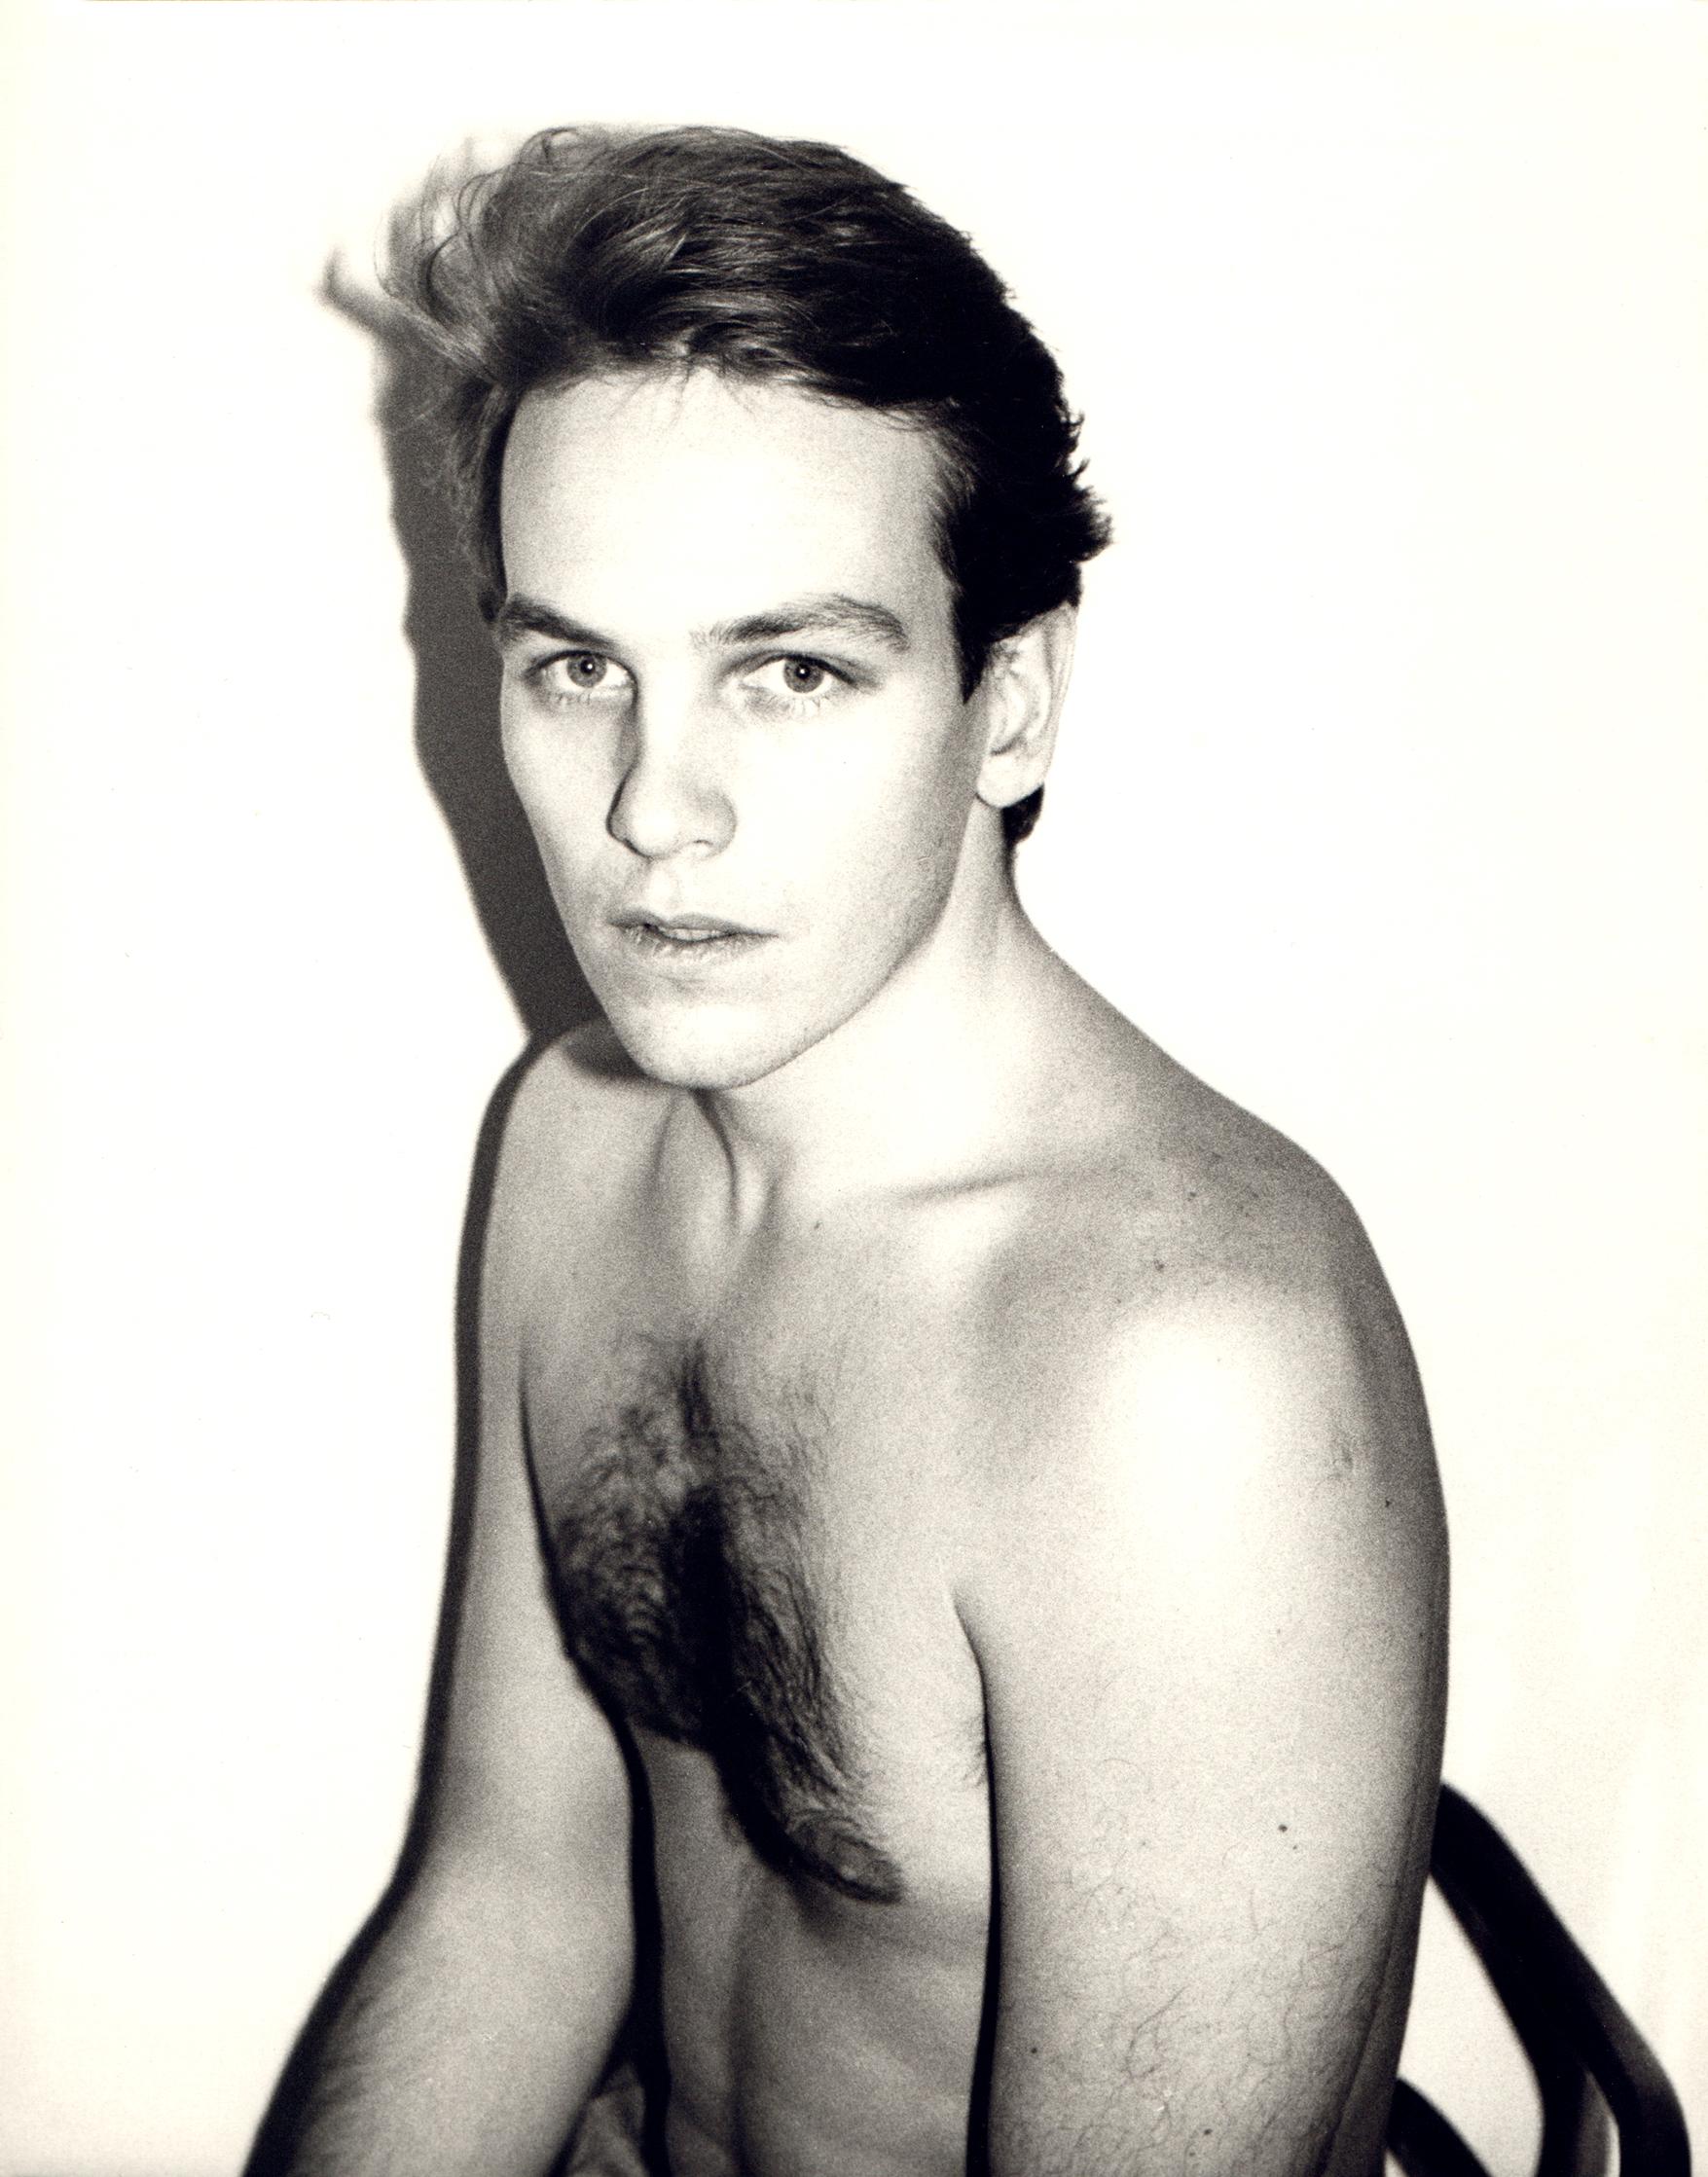 Andy Warhol, Photograph of Ulrik Trojaborg, 1986